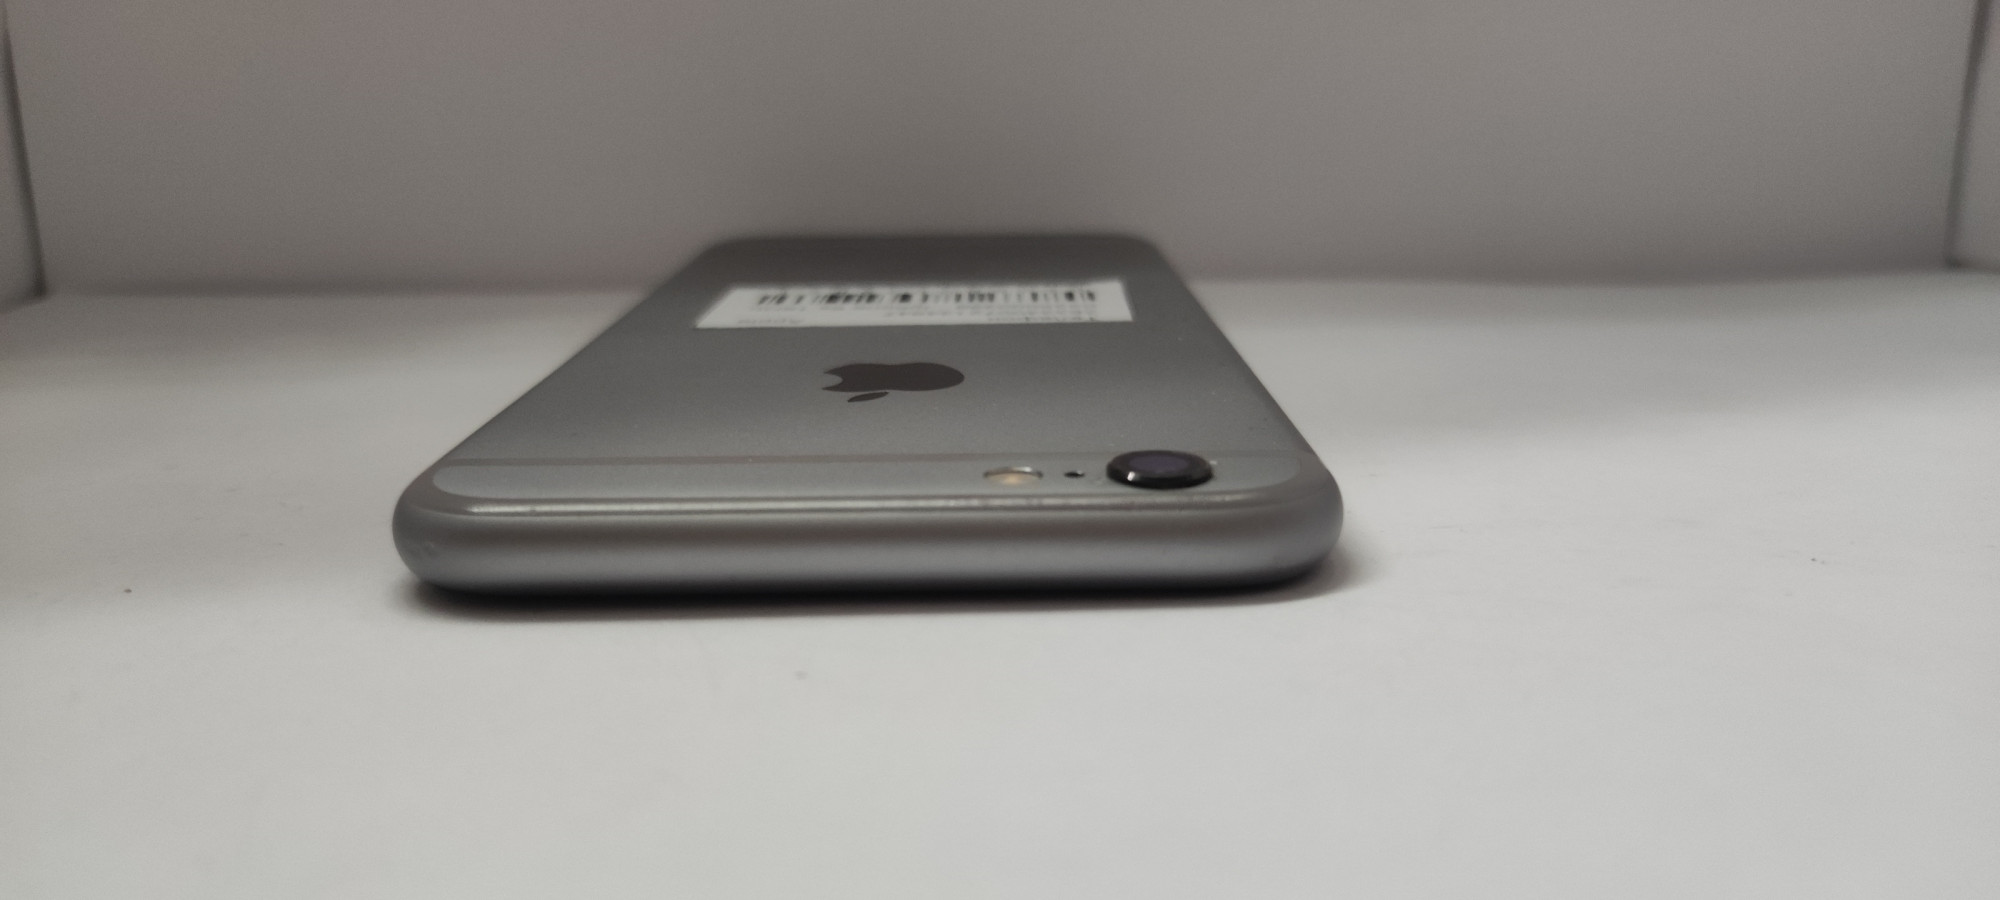 Apple iPhone 6s 16Gb Space Gray (MKQJ2) 5